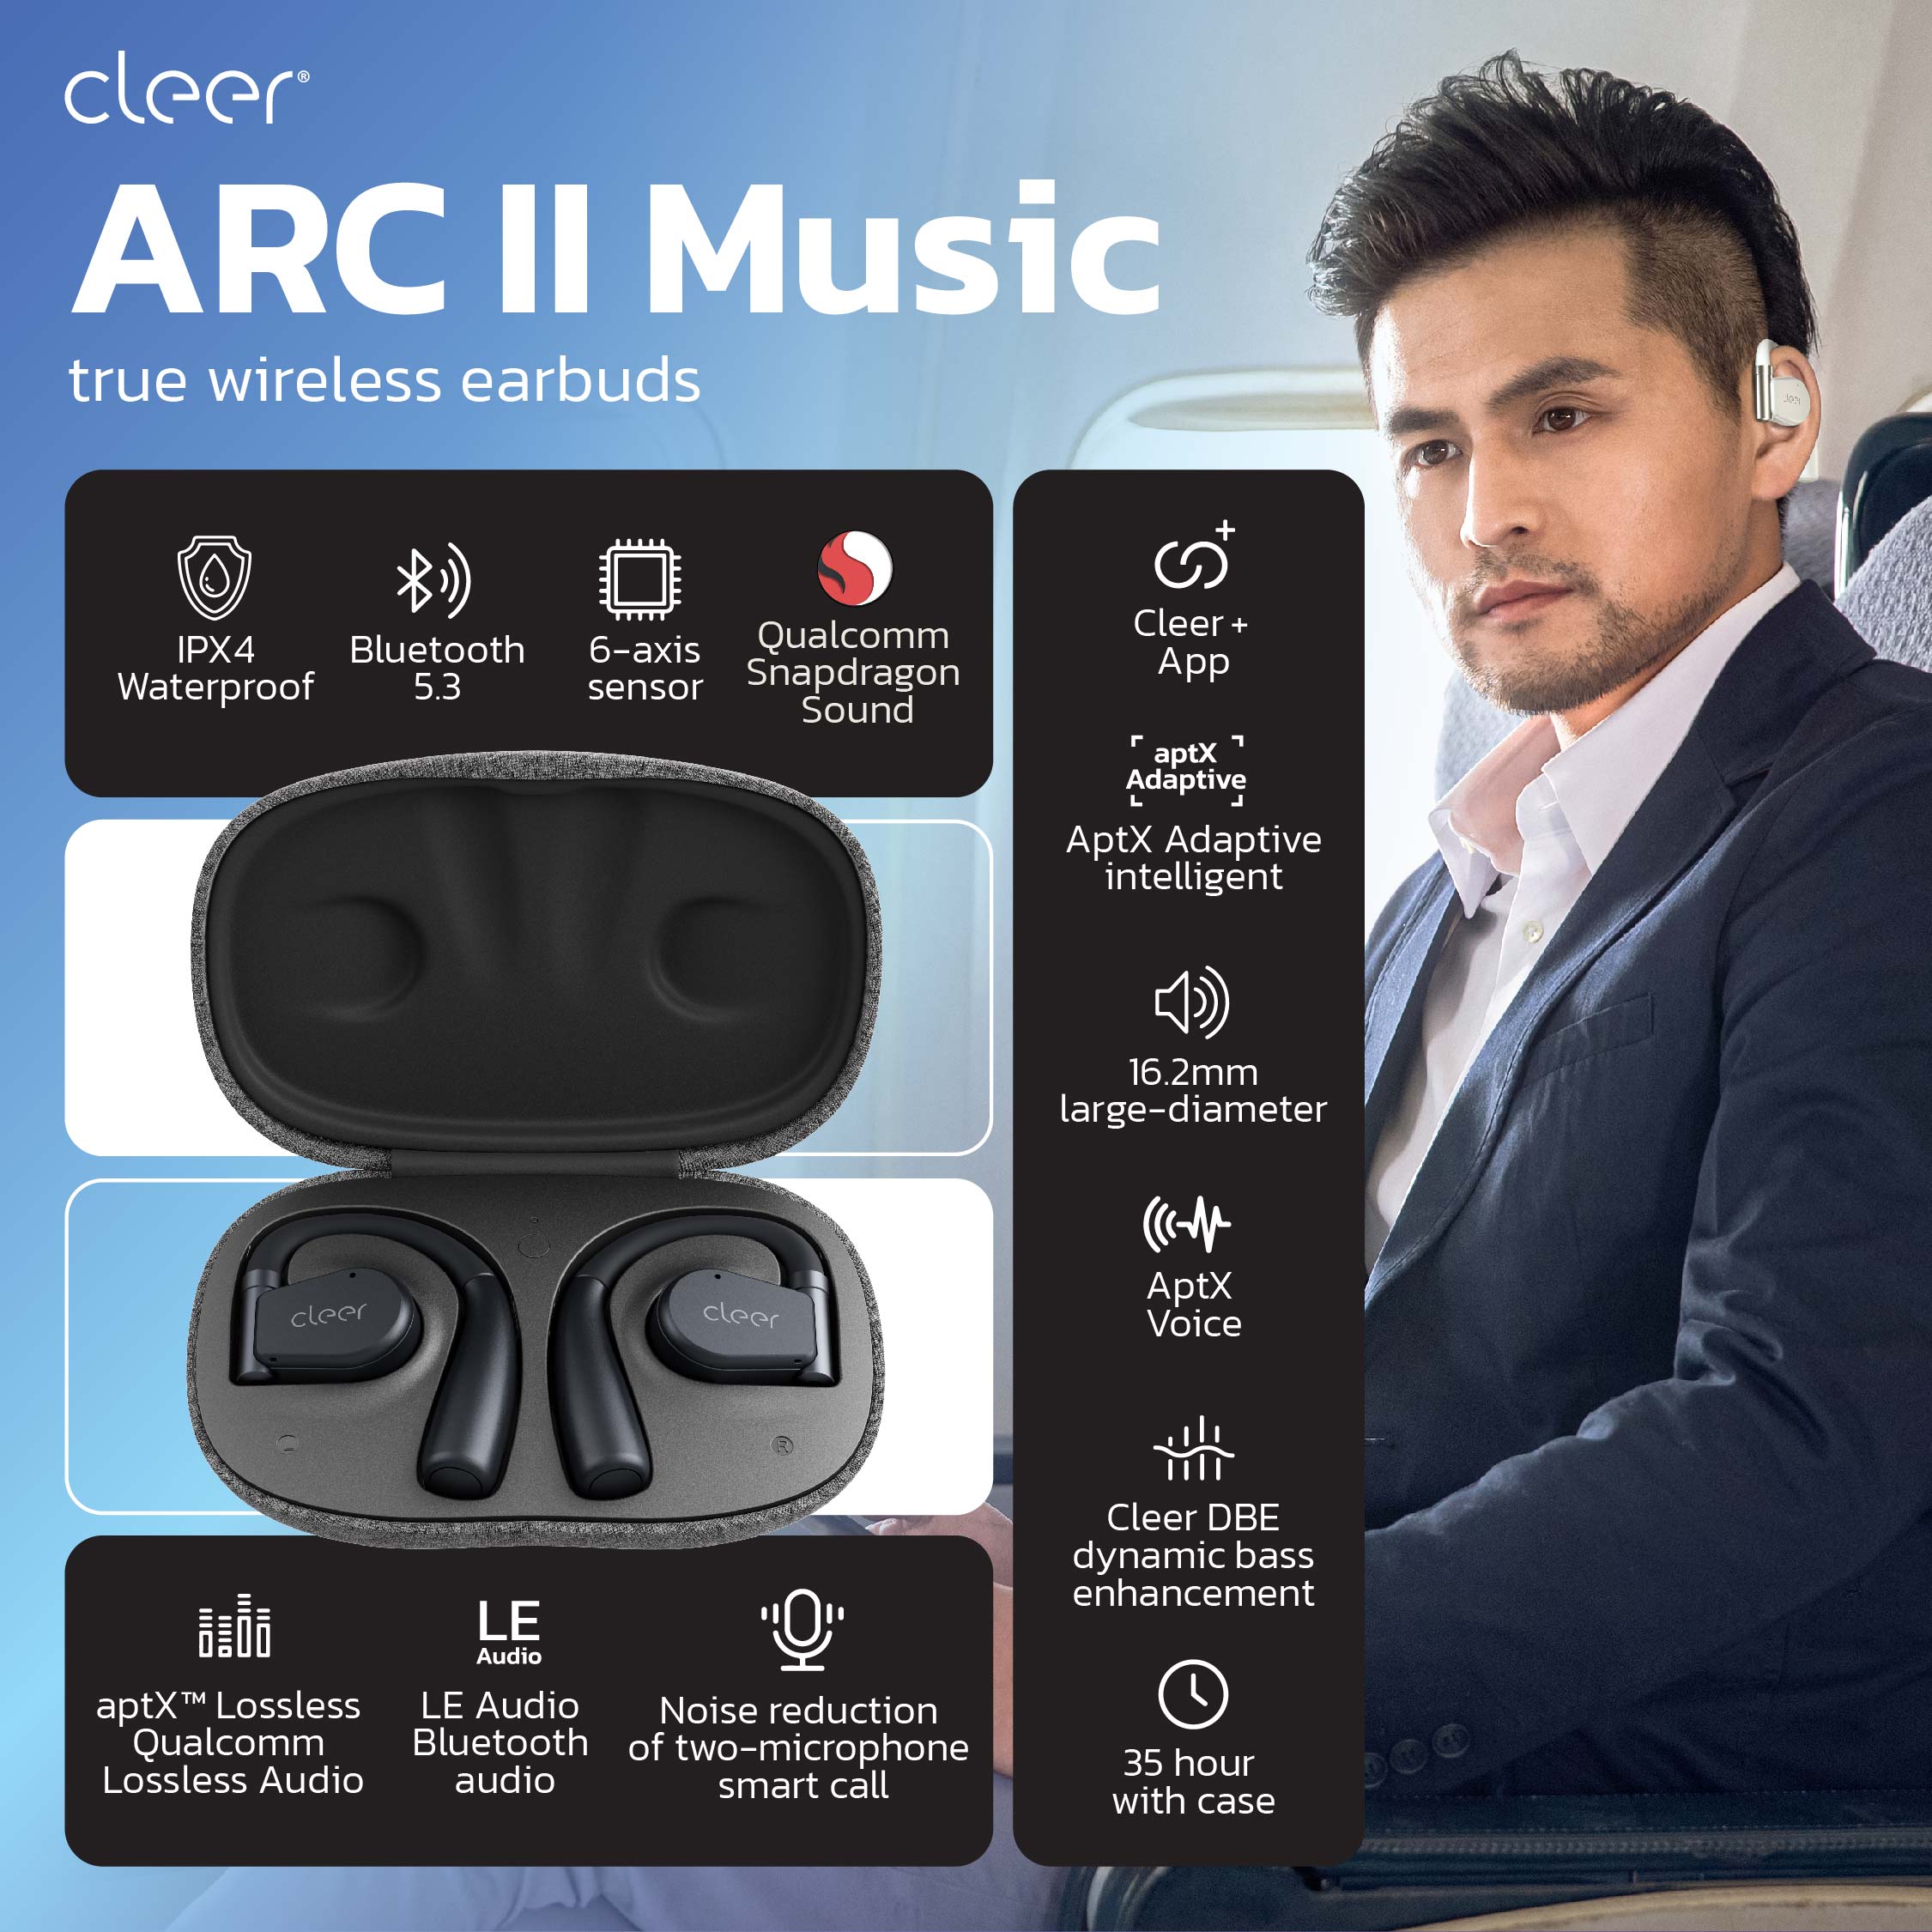 1.Pic Cleer Audio ARC II MUSIC 01 | ARC II MUSIC | RTB เปิดตัวหูฟัง 2 รุ่น “ARC II MUSIC” และ “ARC II SPORT” จากแบรนด์ Cleer ด้วยดีไซน์มาแรงแบบ Open Ear